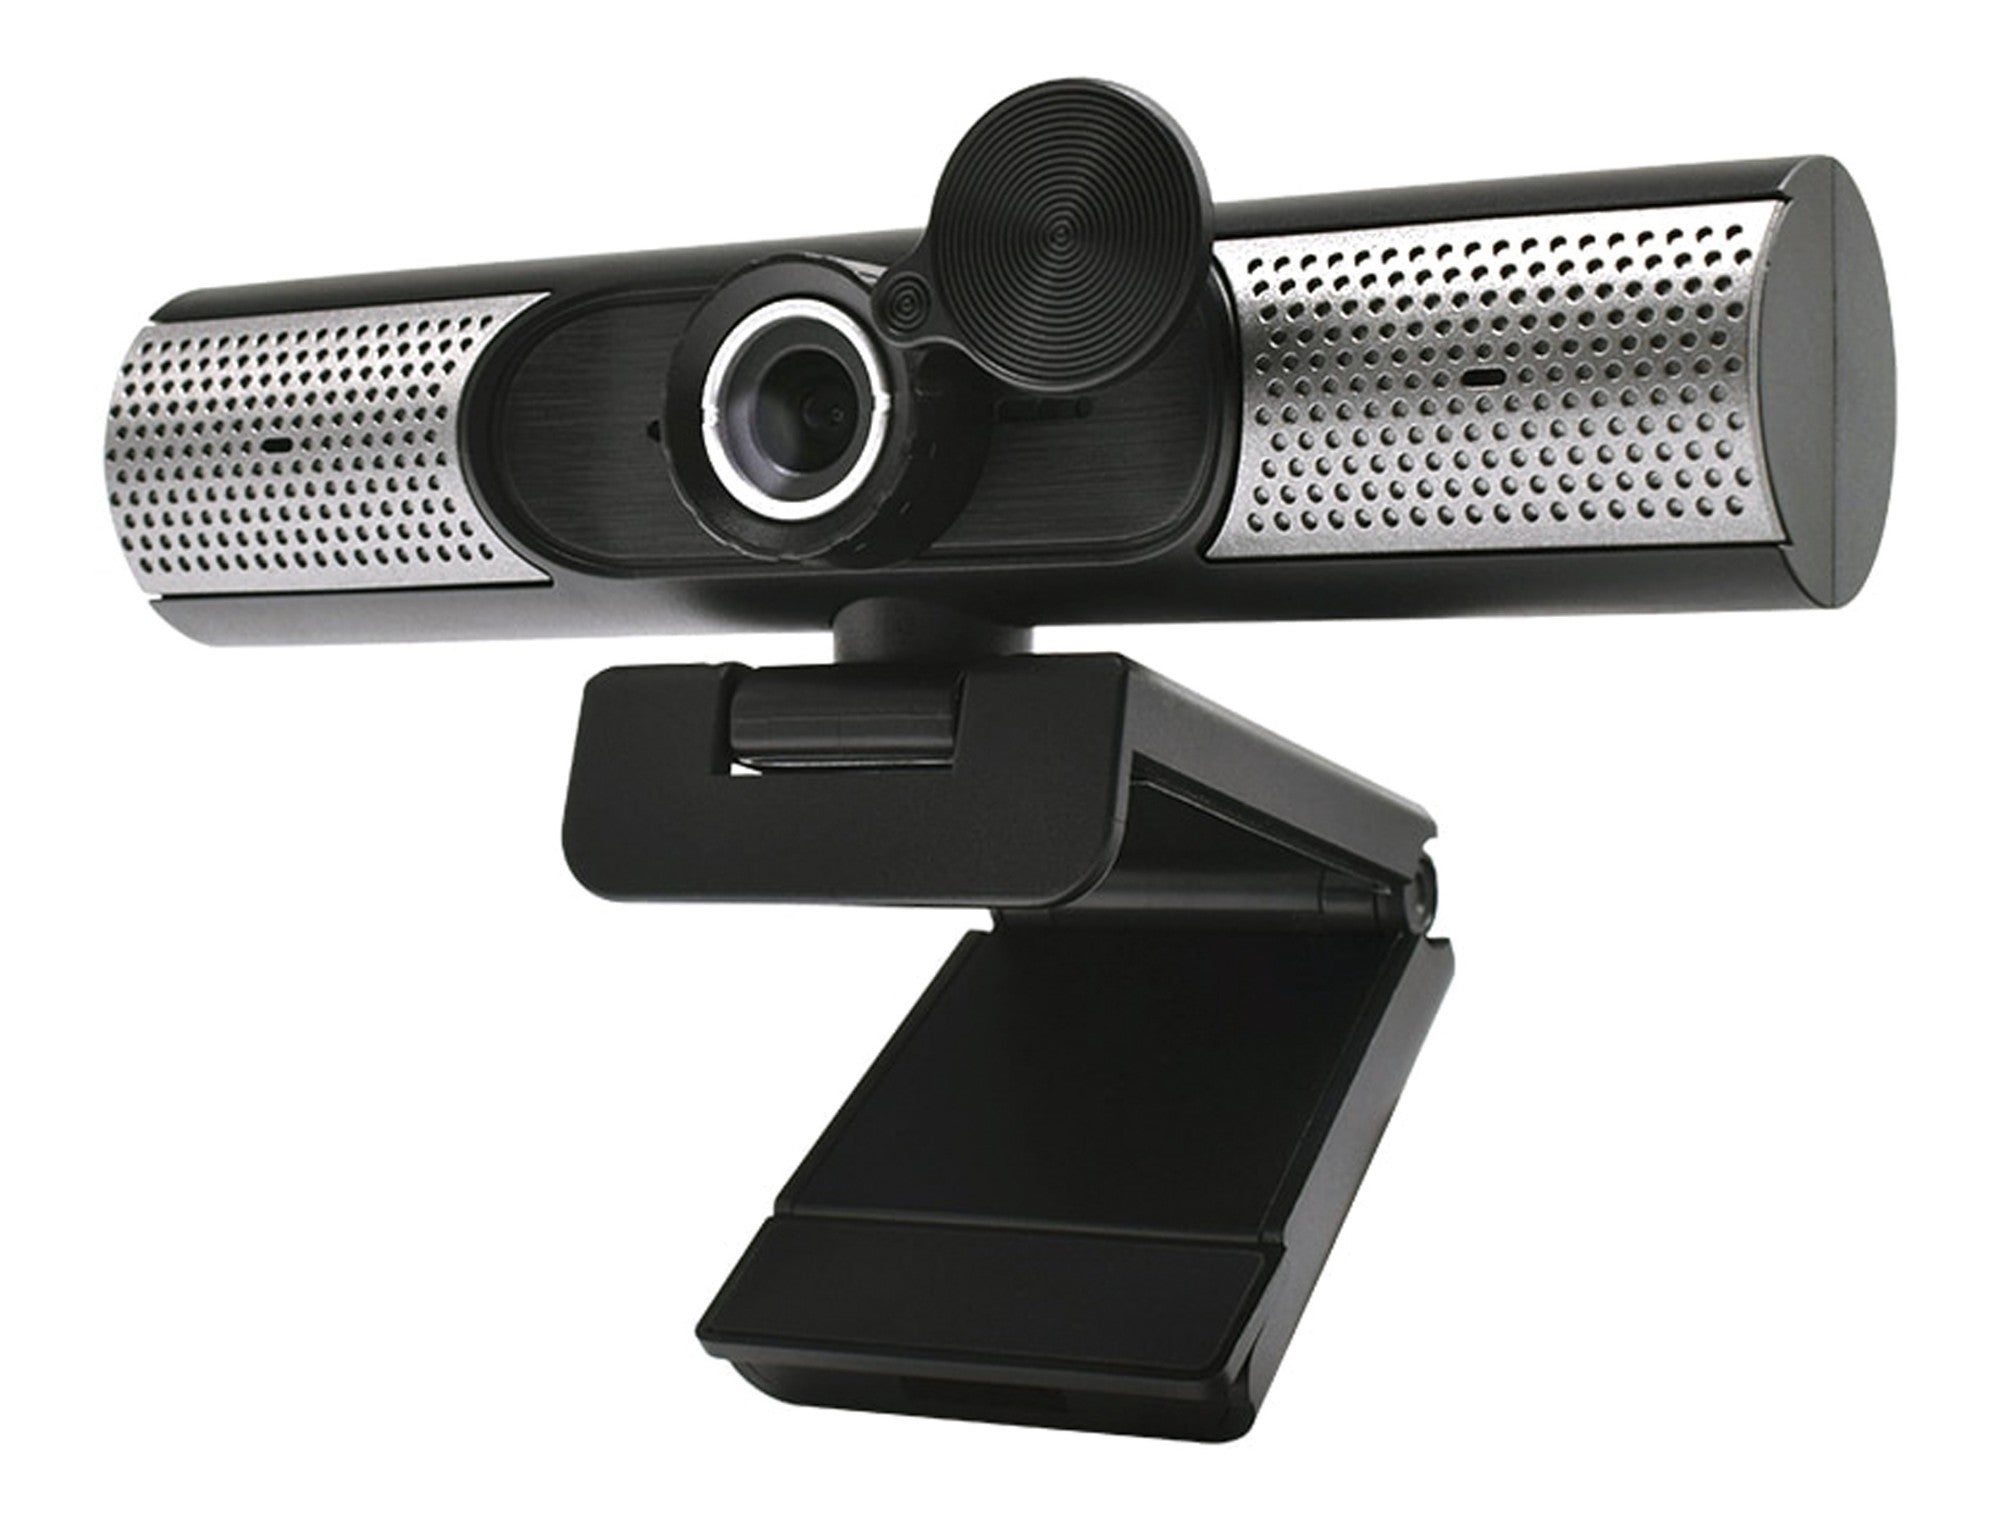 USB Webcam (with lens cover)